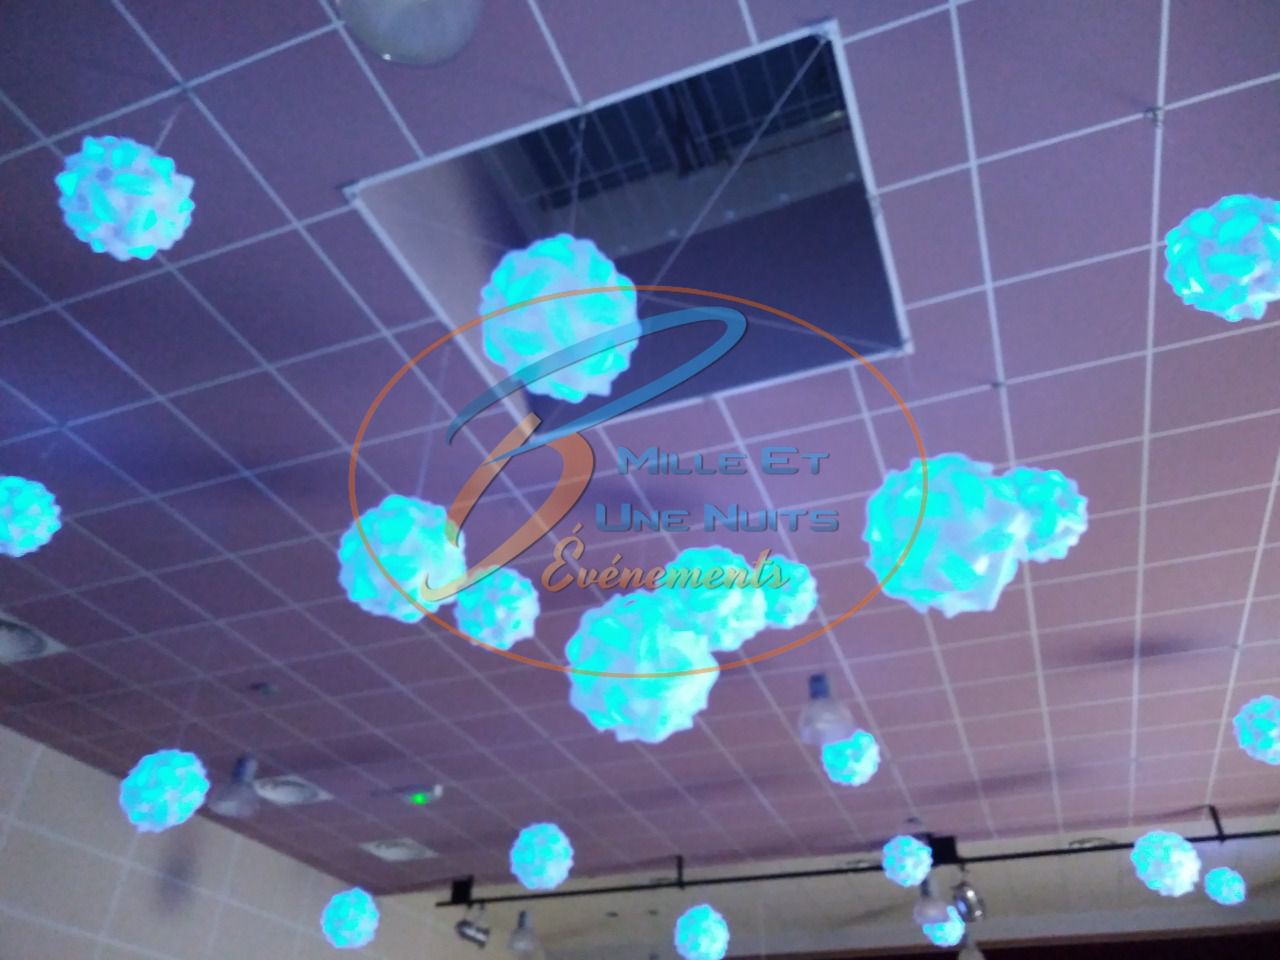 Plafond de nuage LED 